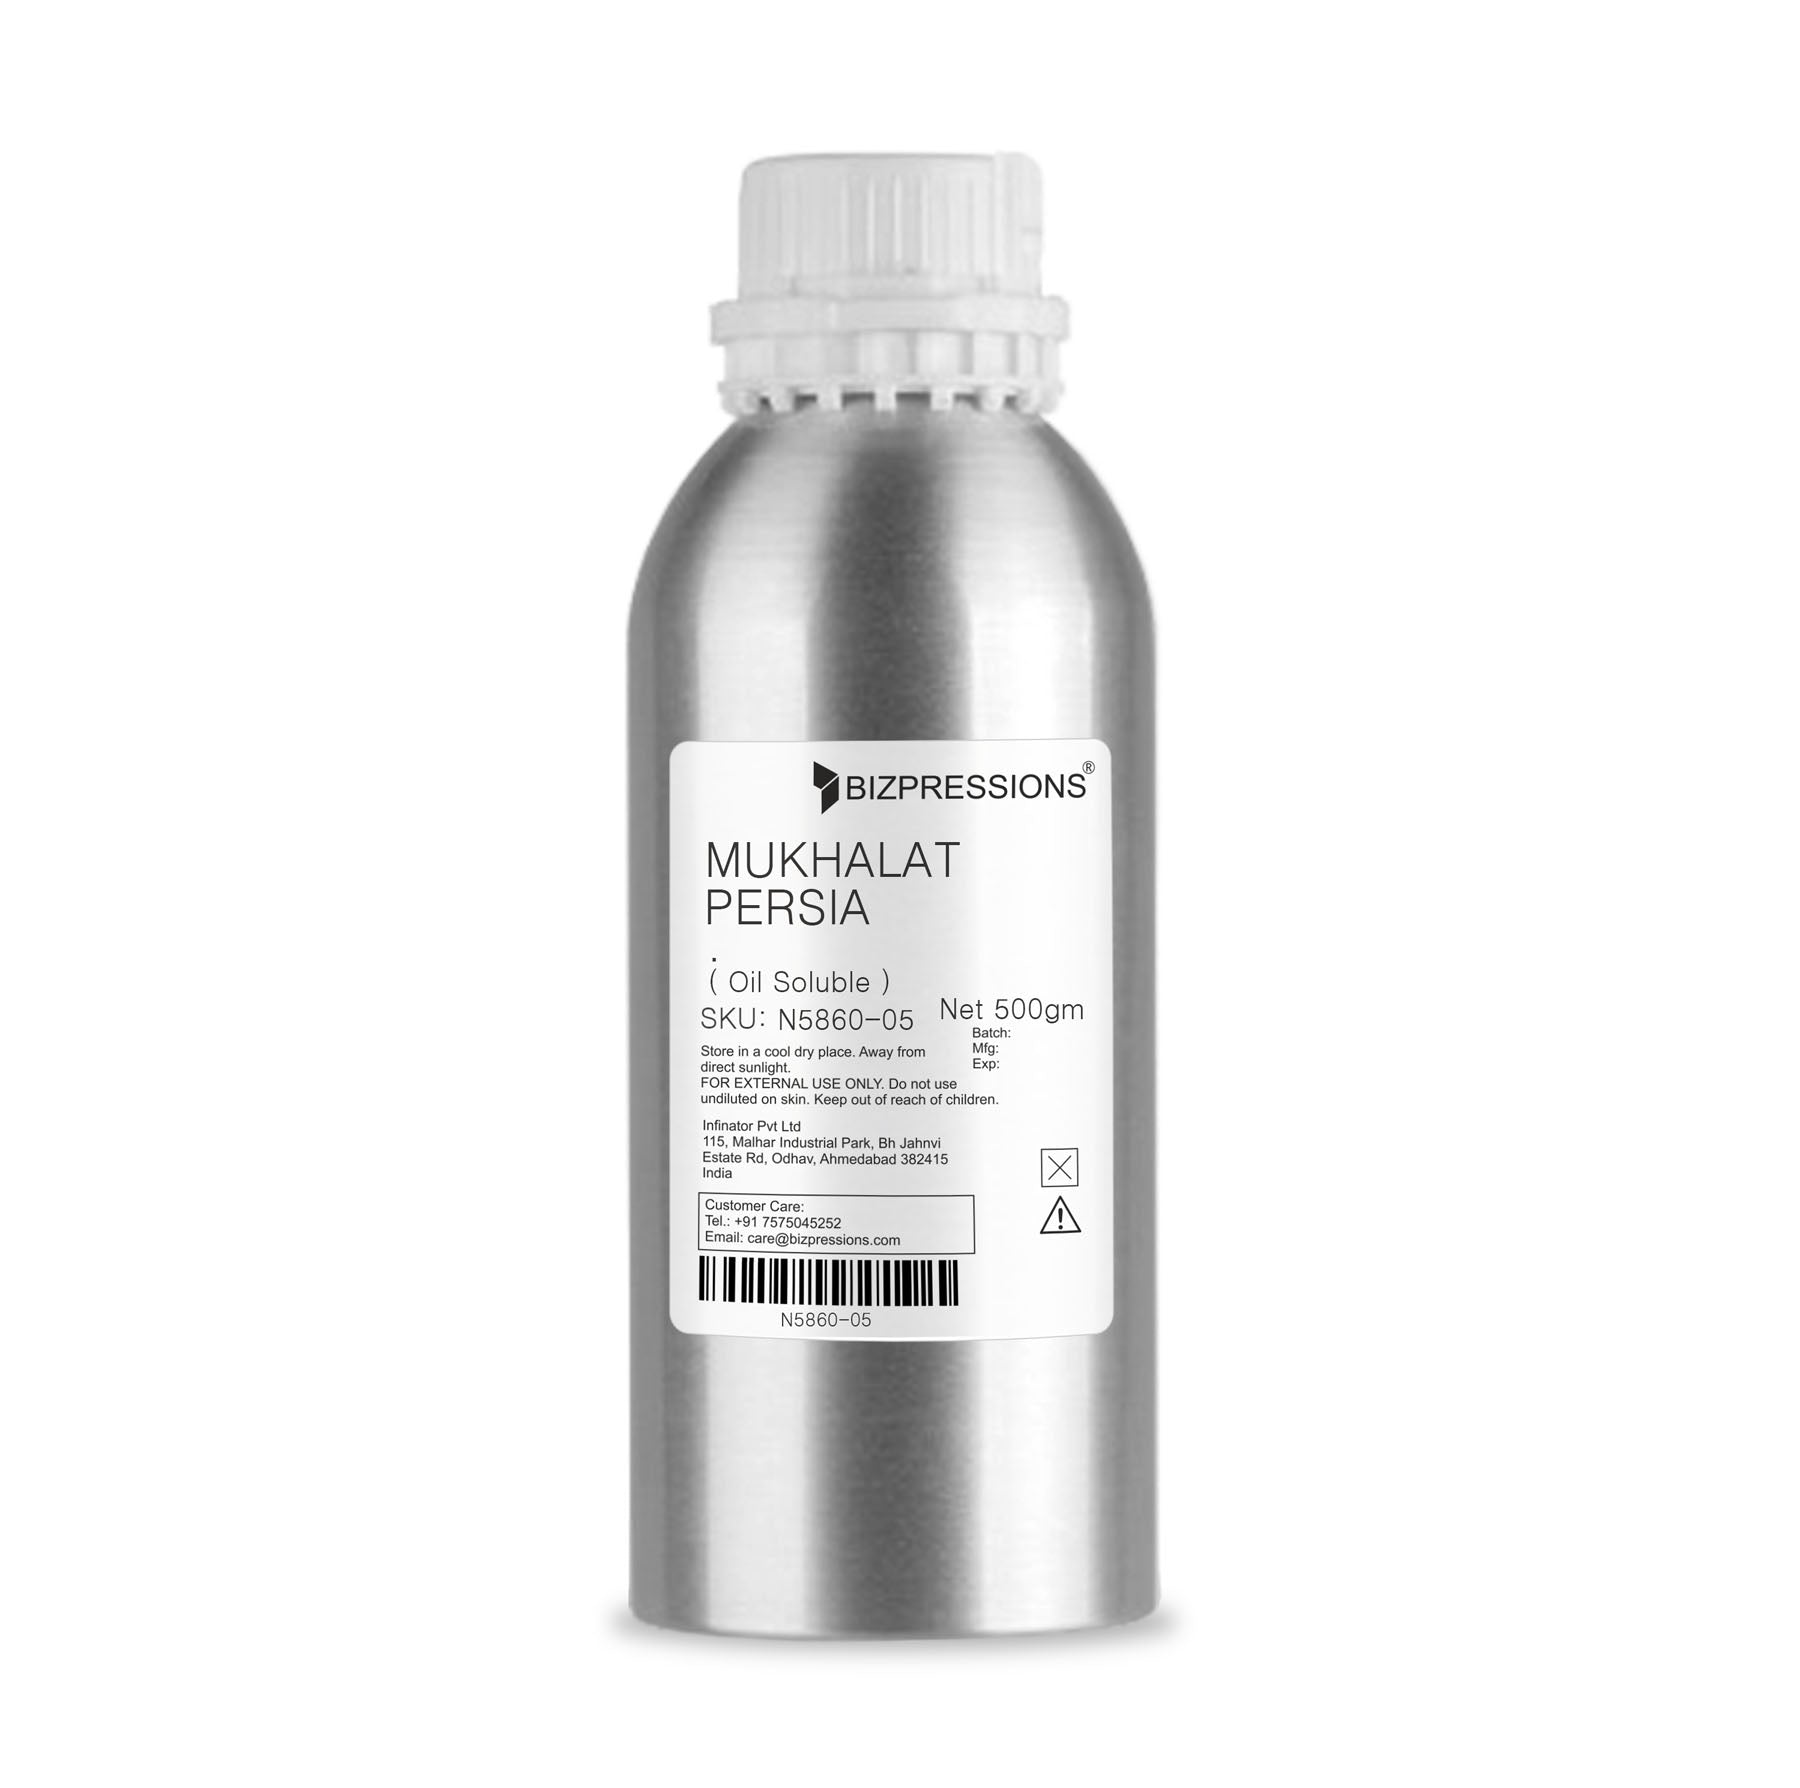 MUKHALAT PERSIA - Fragrance ( Oil Soluble ) - 500 gm